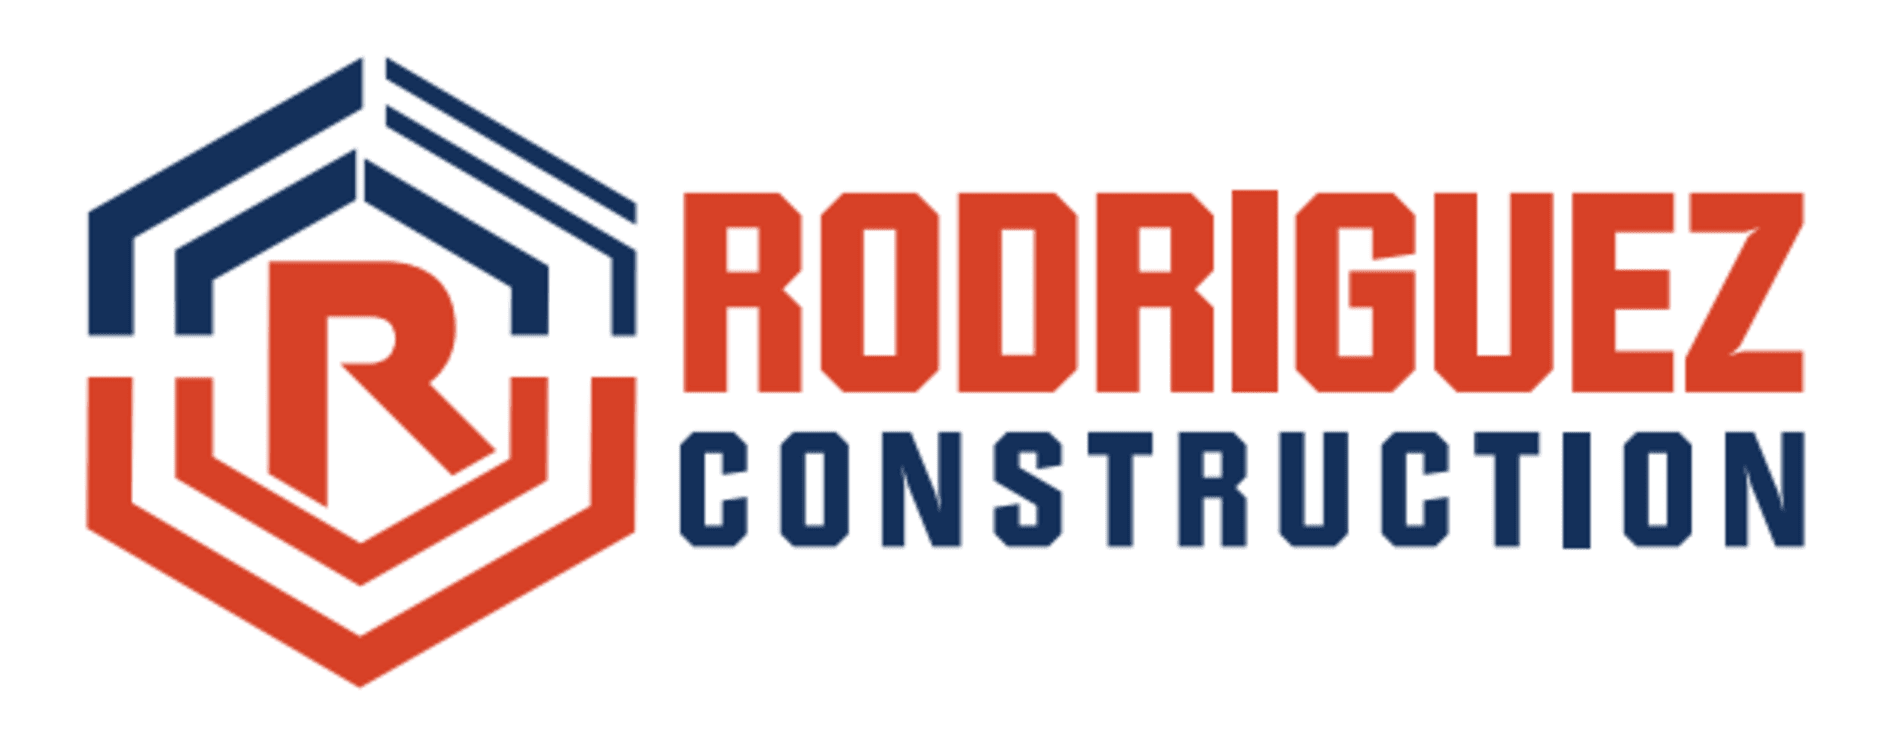 Rodriguez Construction